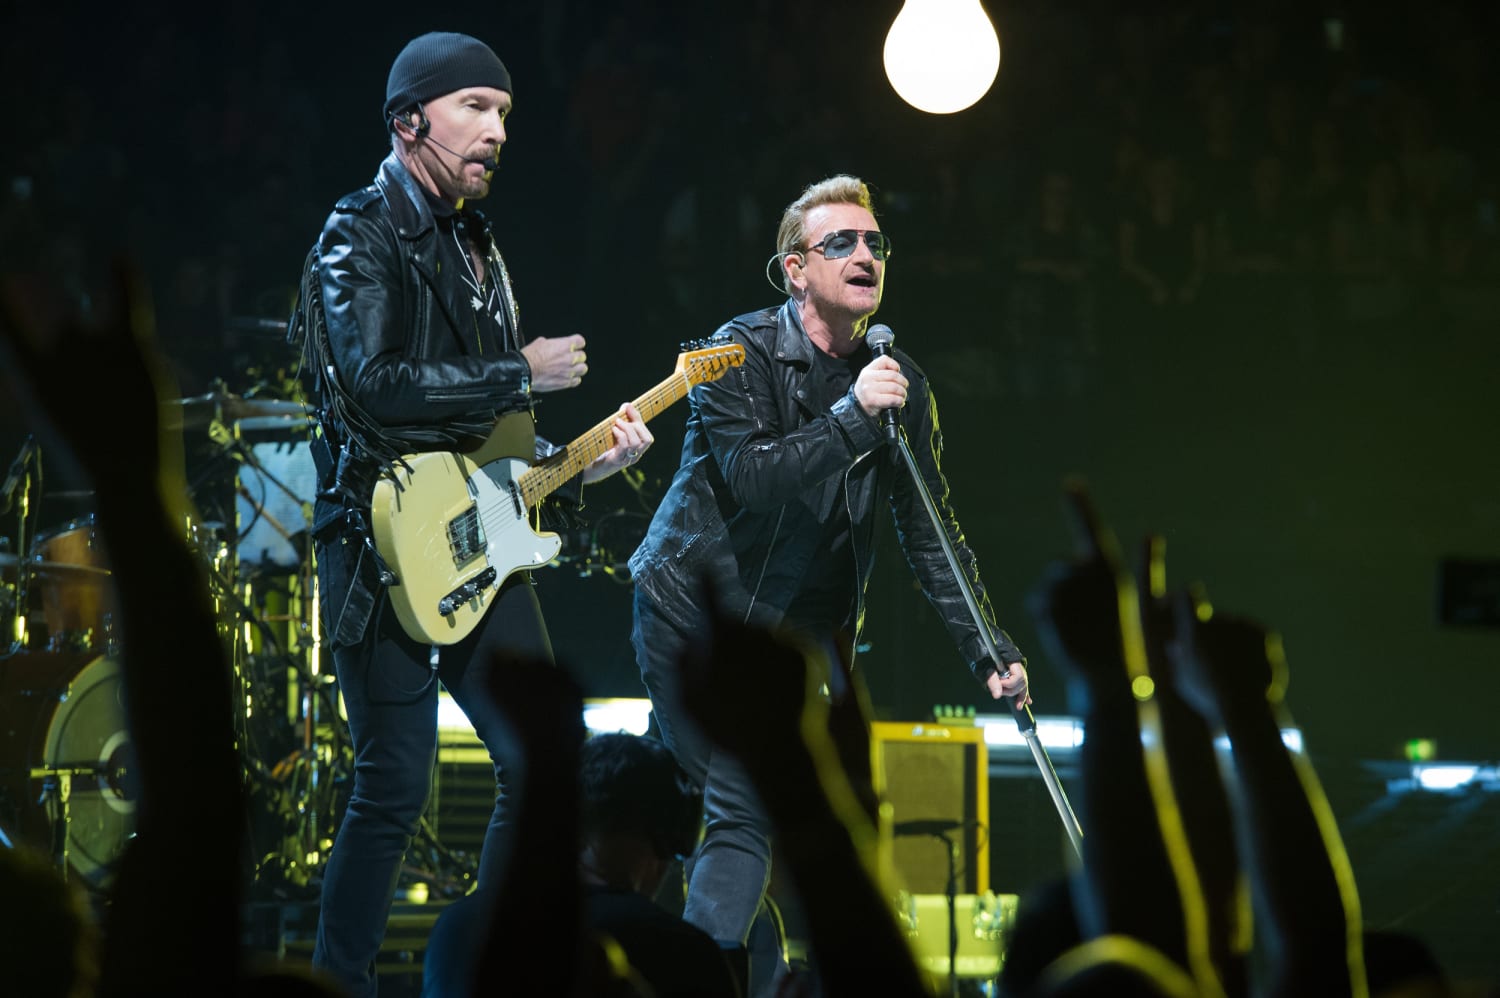 U2 'Devastated' Over Paris Attacks, Cancels Show